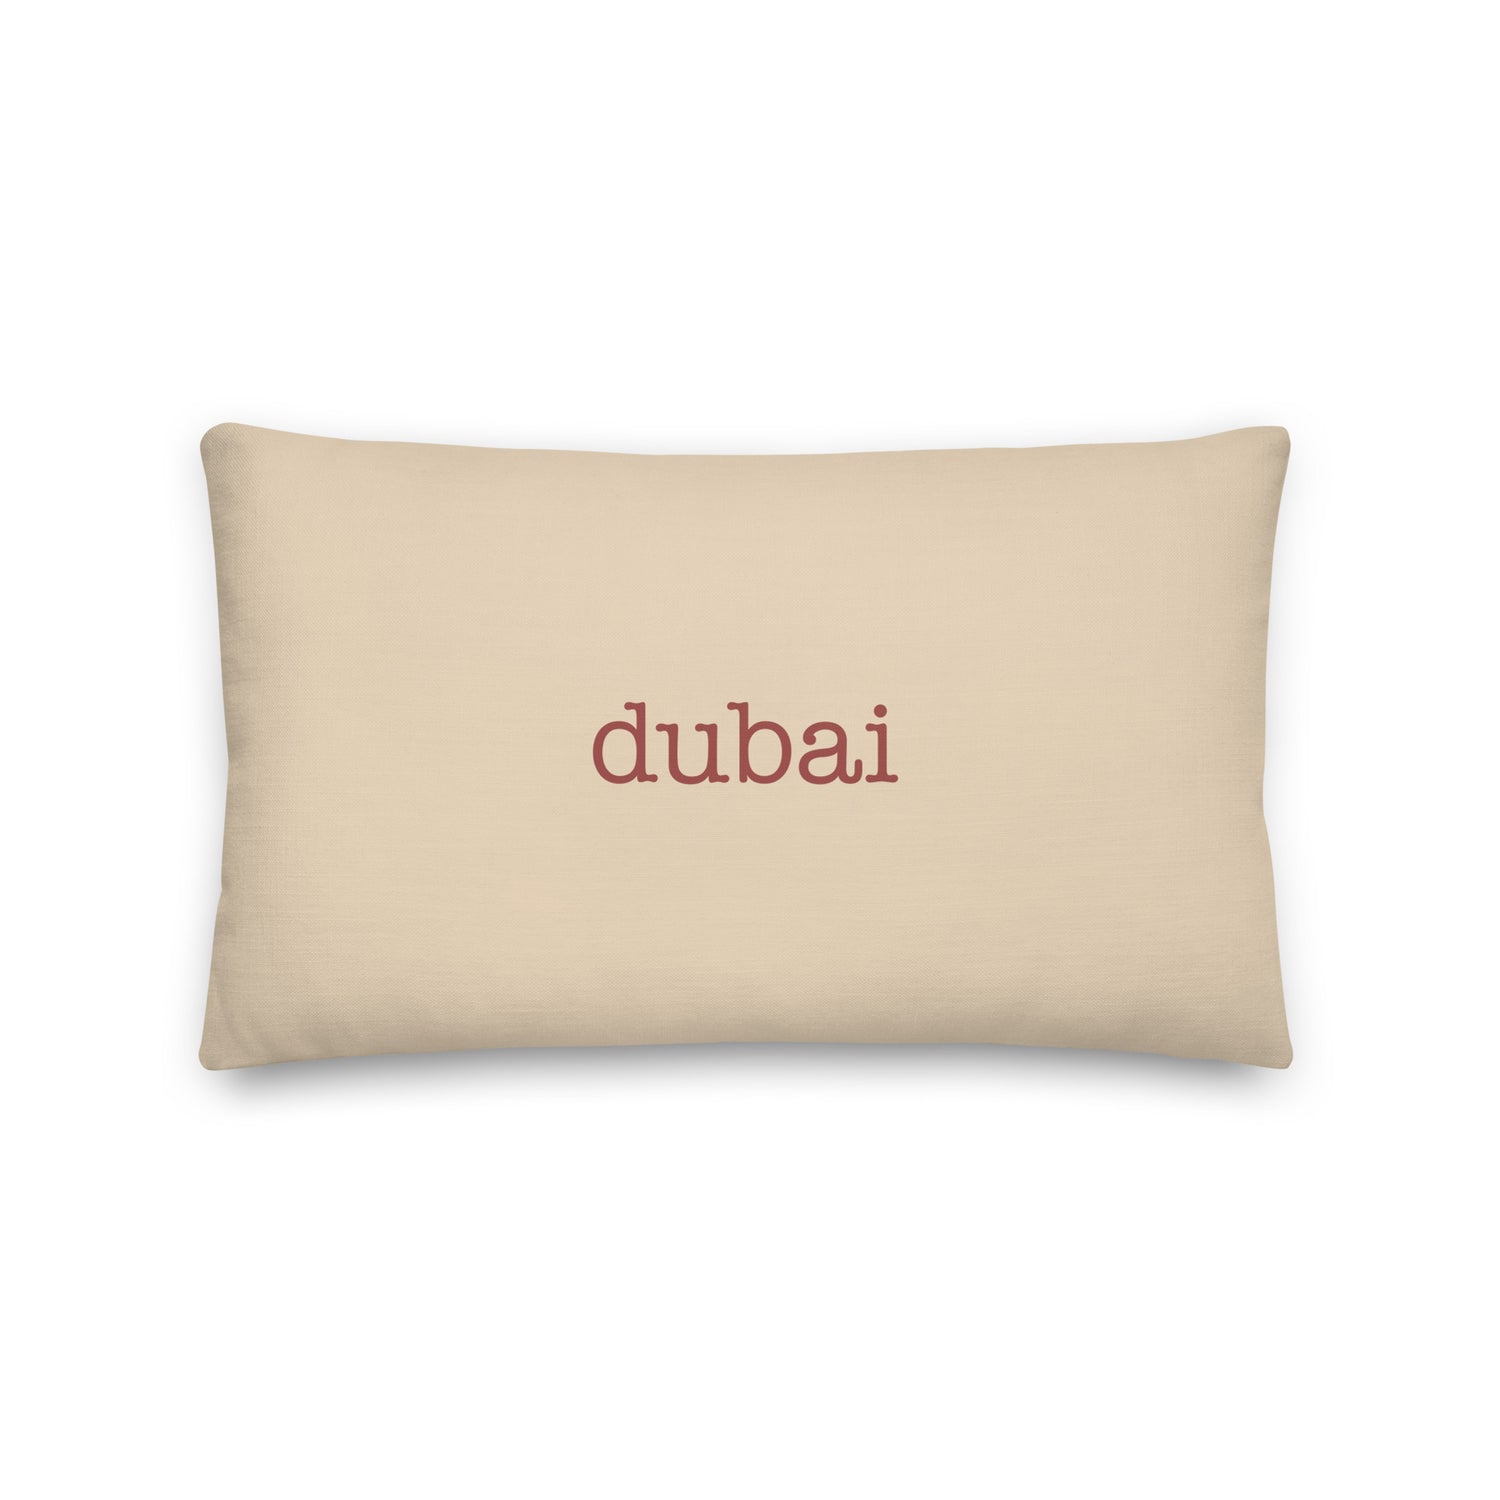 Dubai United Arab Emirates Pillows and Blankets • DXB Airport Code